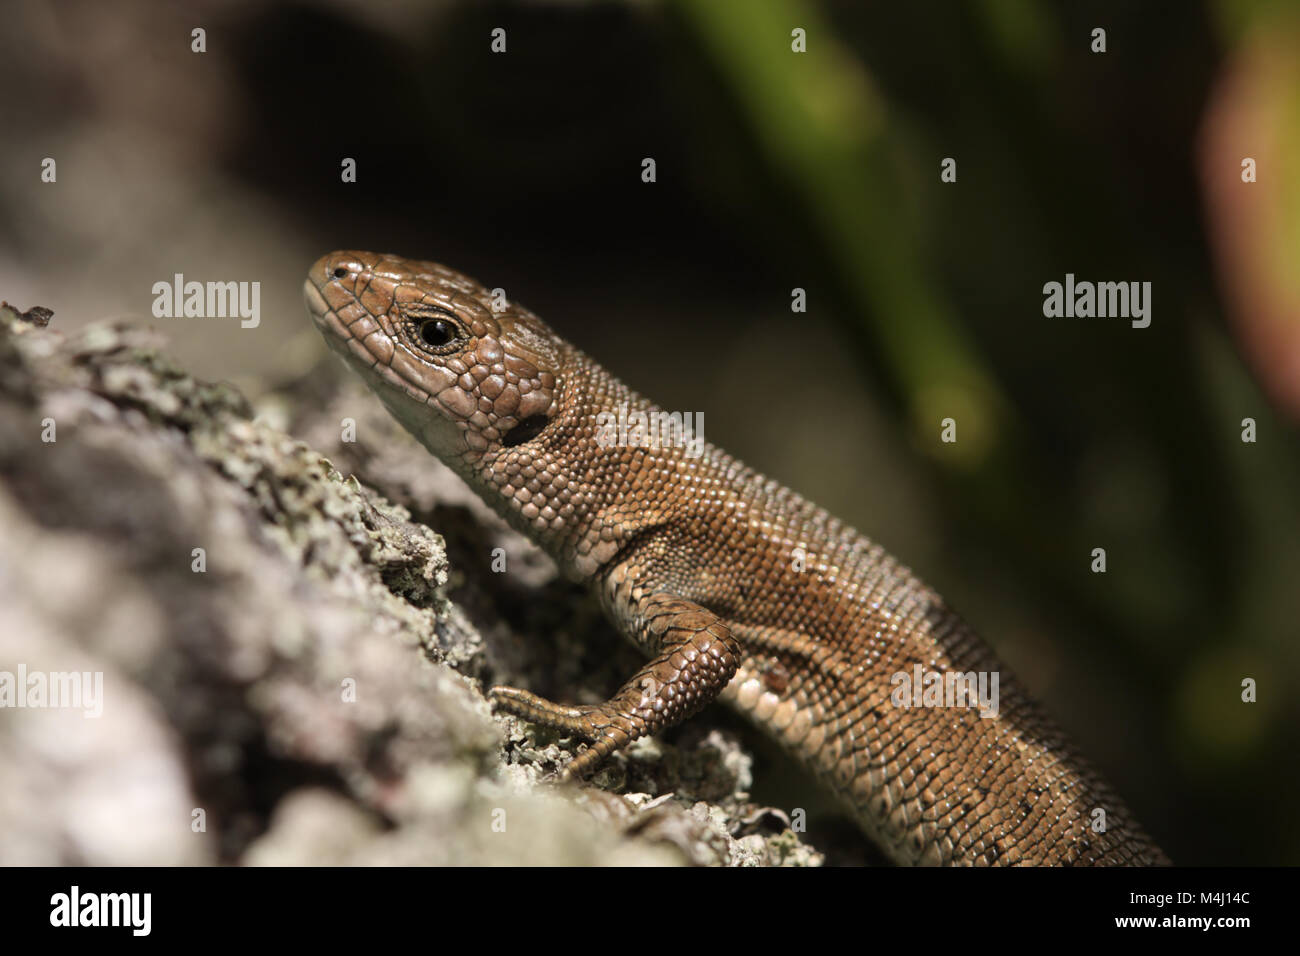 Jugendliche gemeinsame zootoca vivipara Lizard Stockfoto